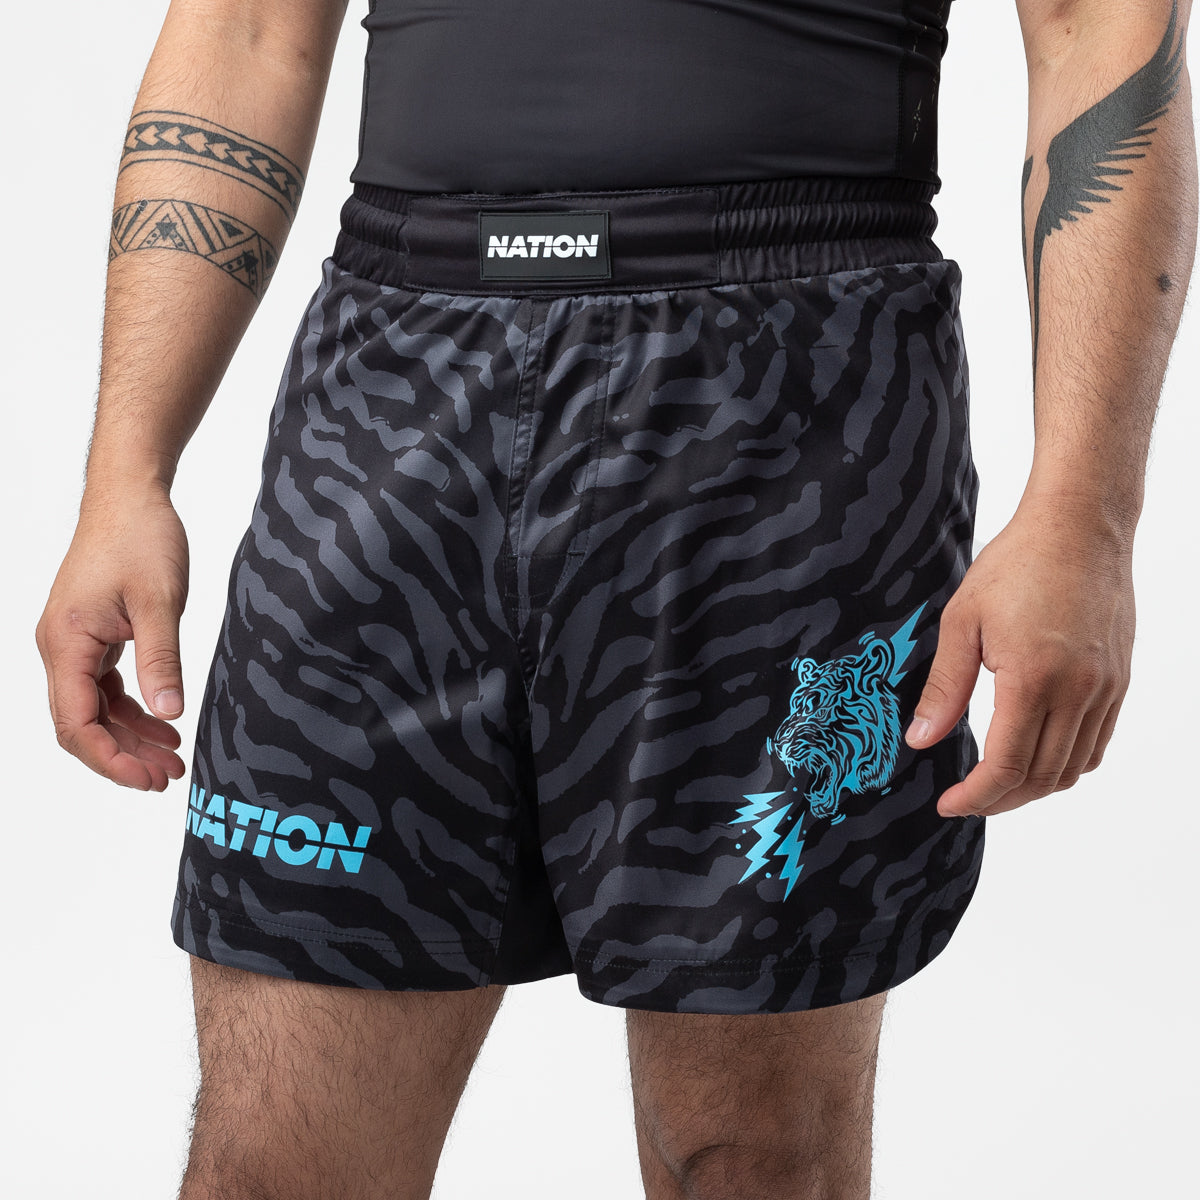 Nation Athletic "Tiger Roar" Shorts